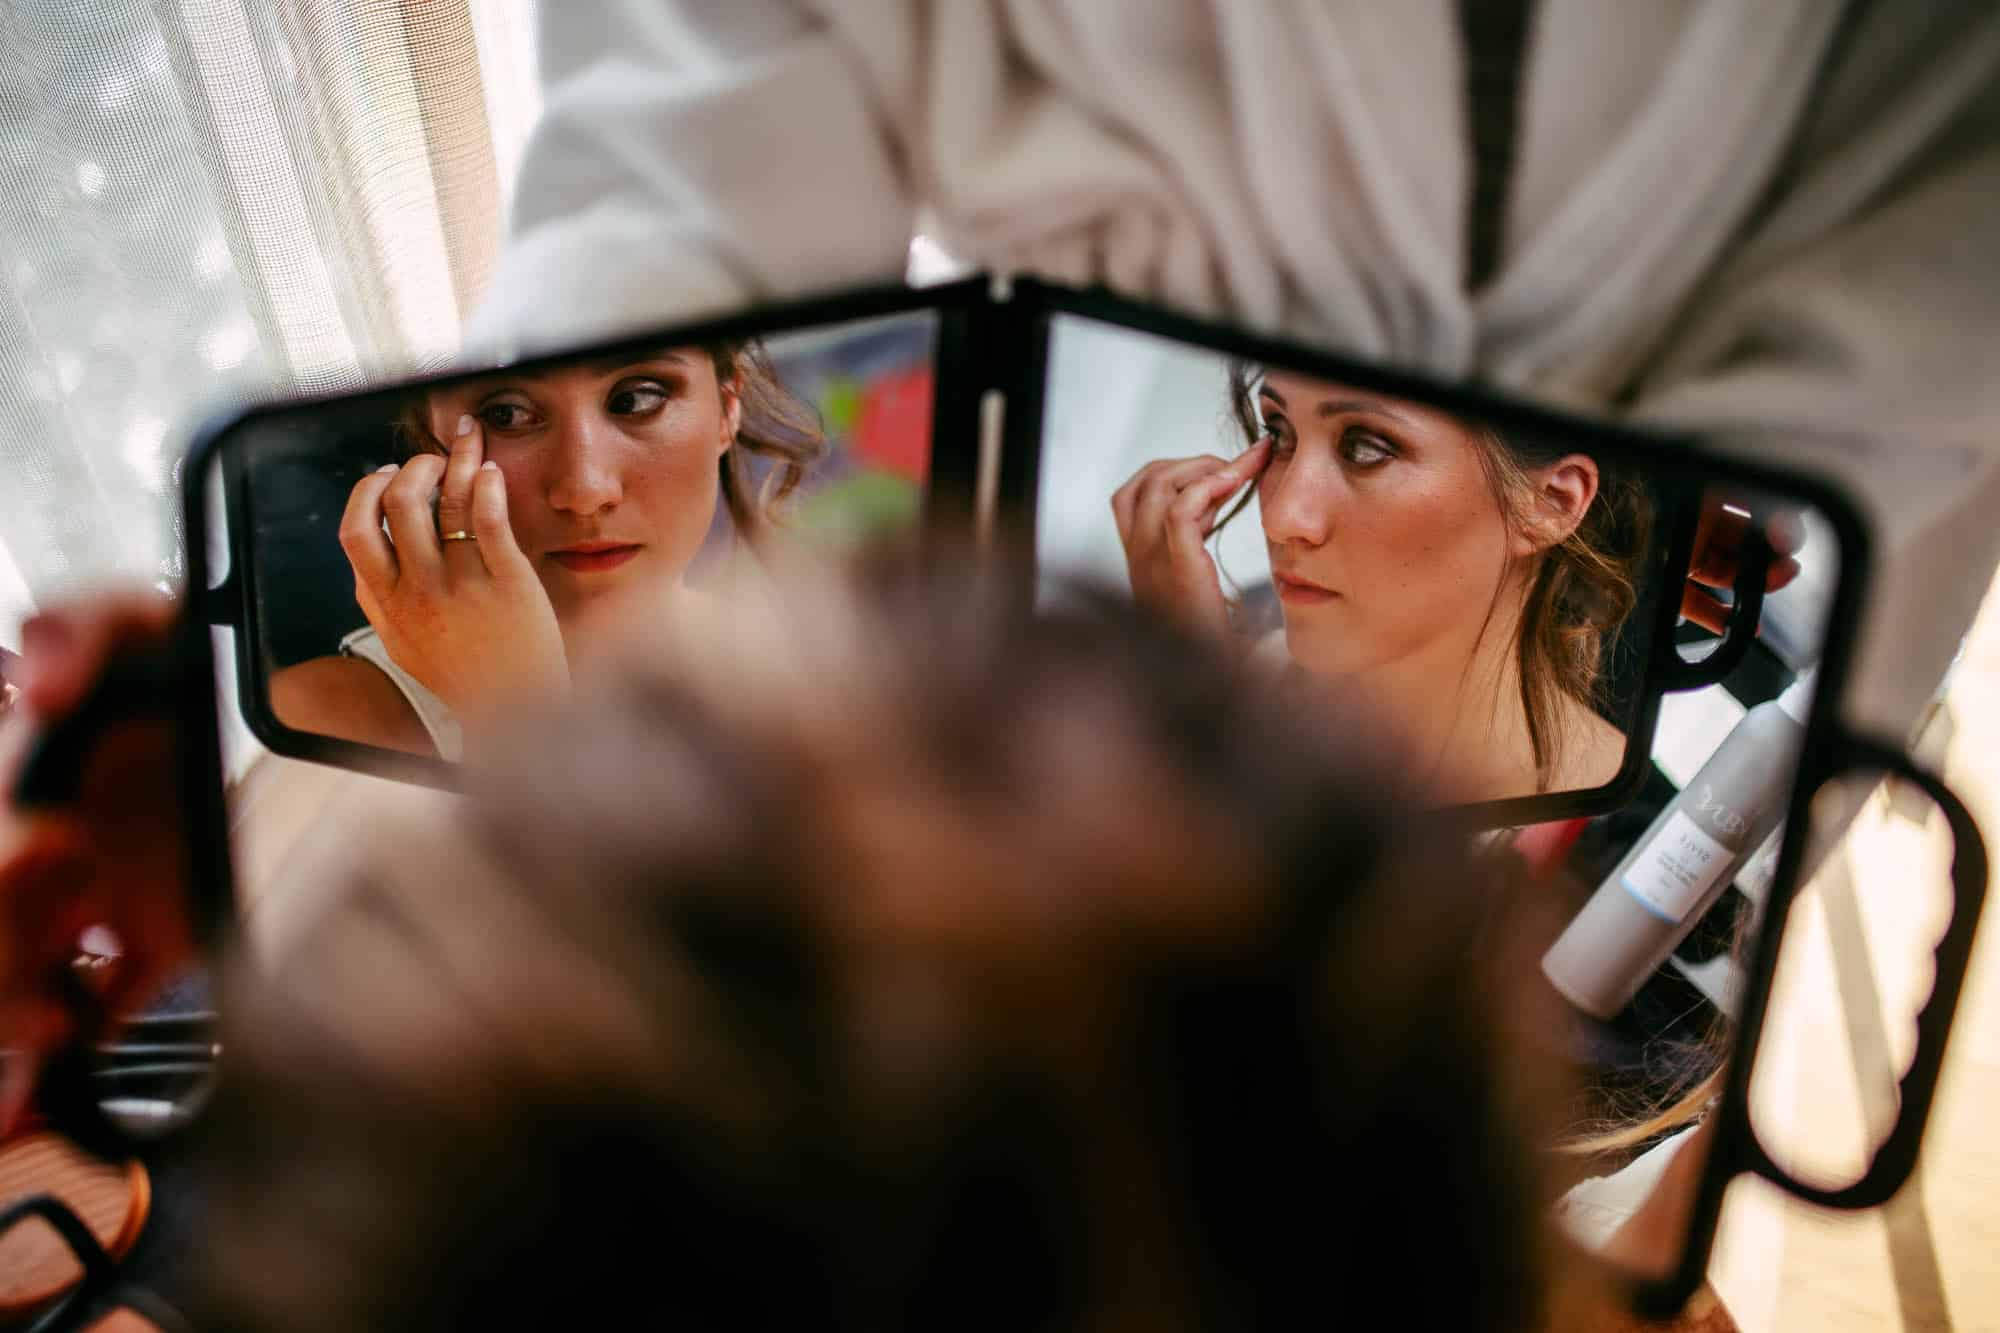 Bridal make-up via mirror